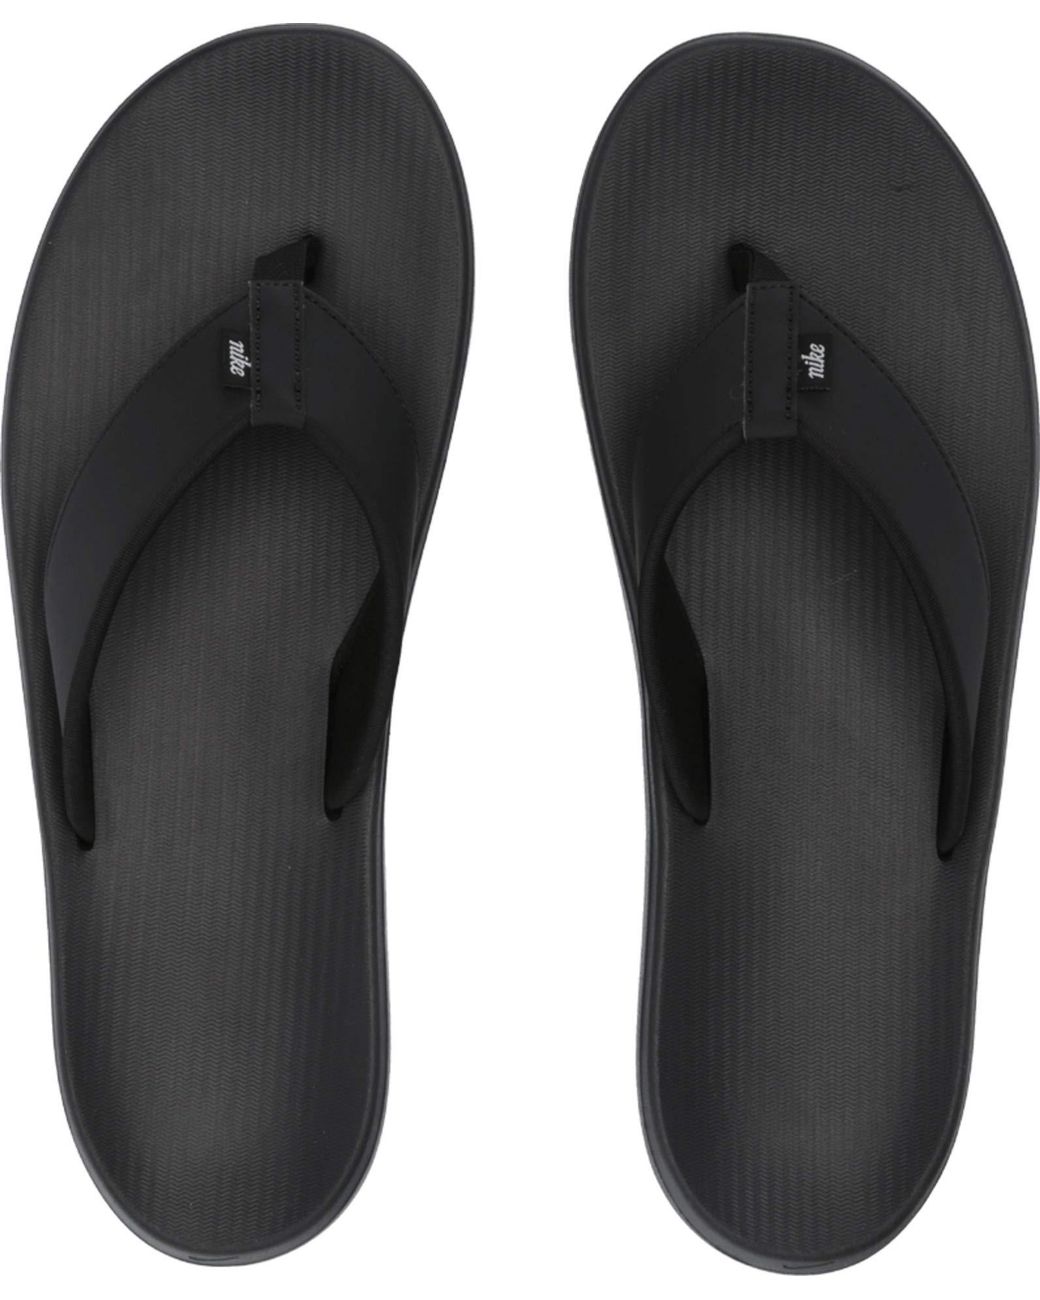 Nike Kepa Kai Shoe in Black/White 